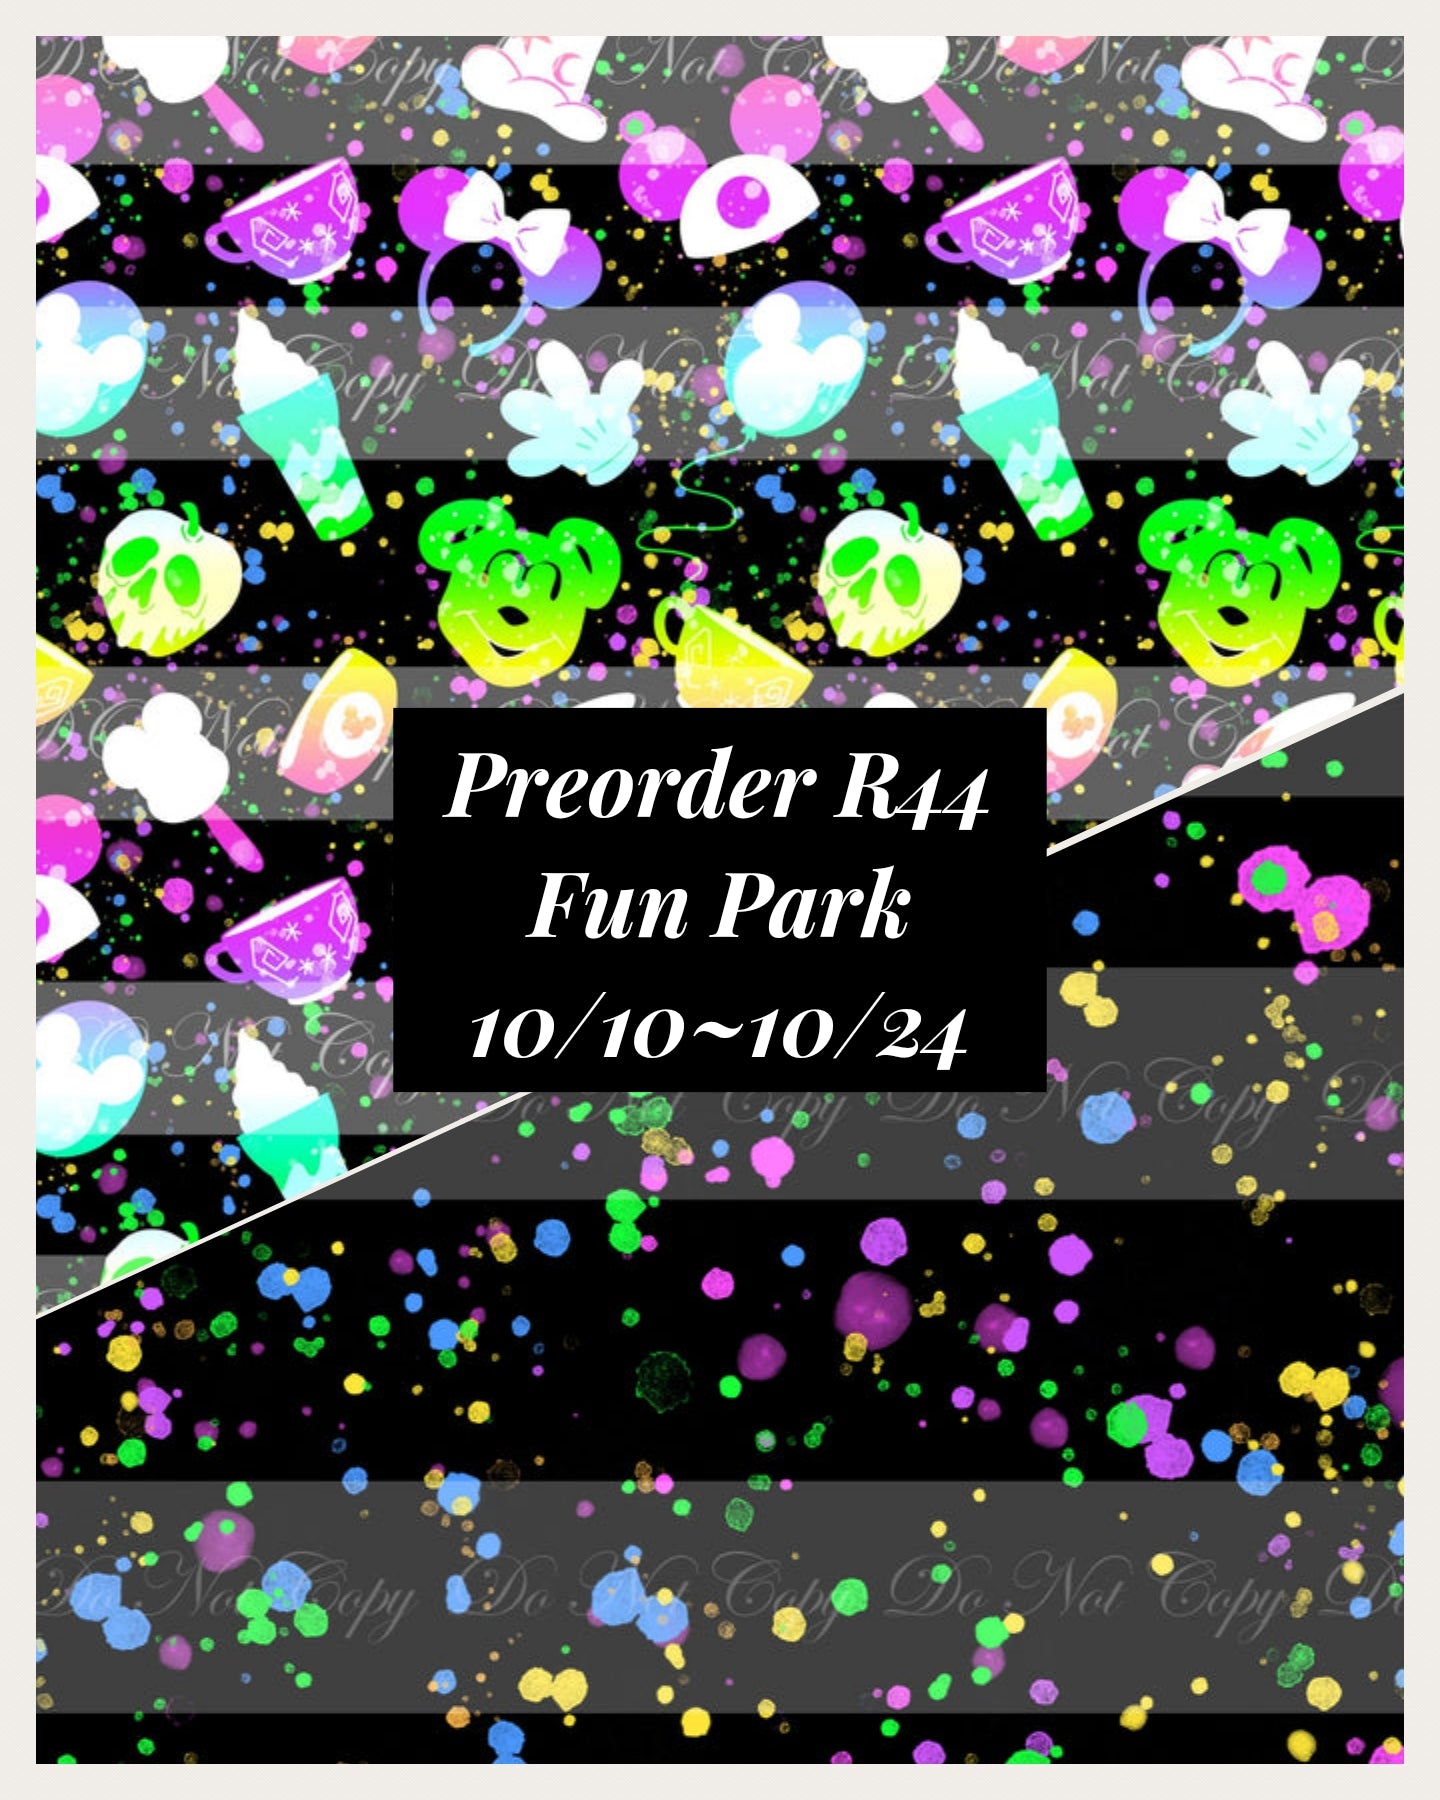 PREORDER R44 - Fun Park